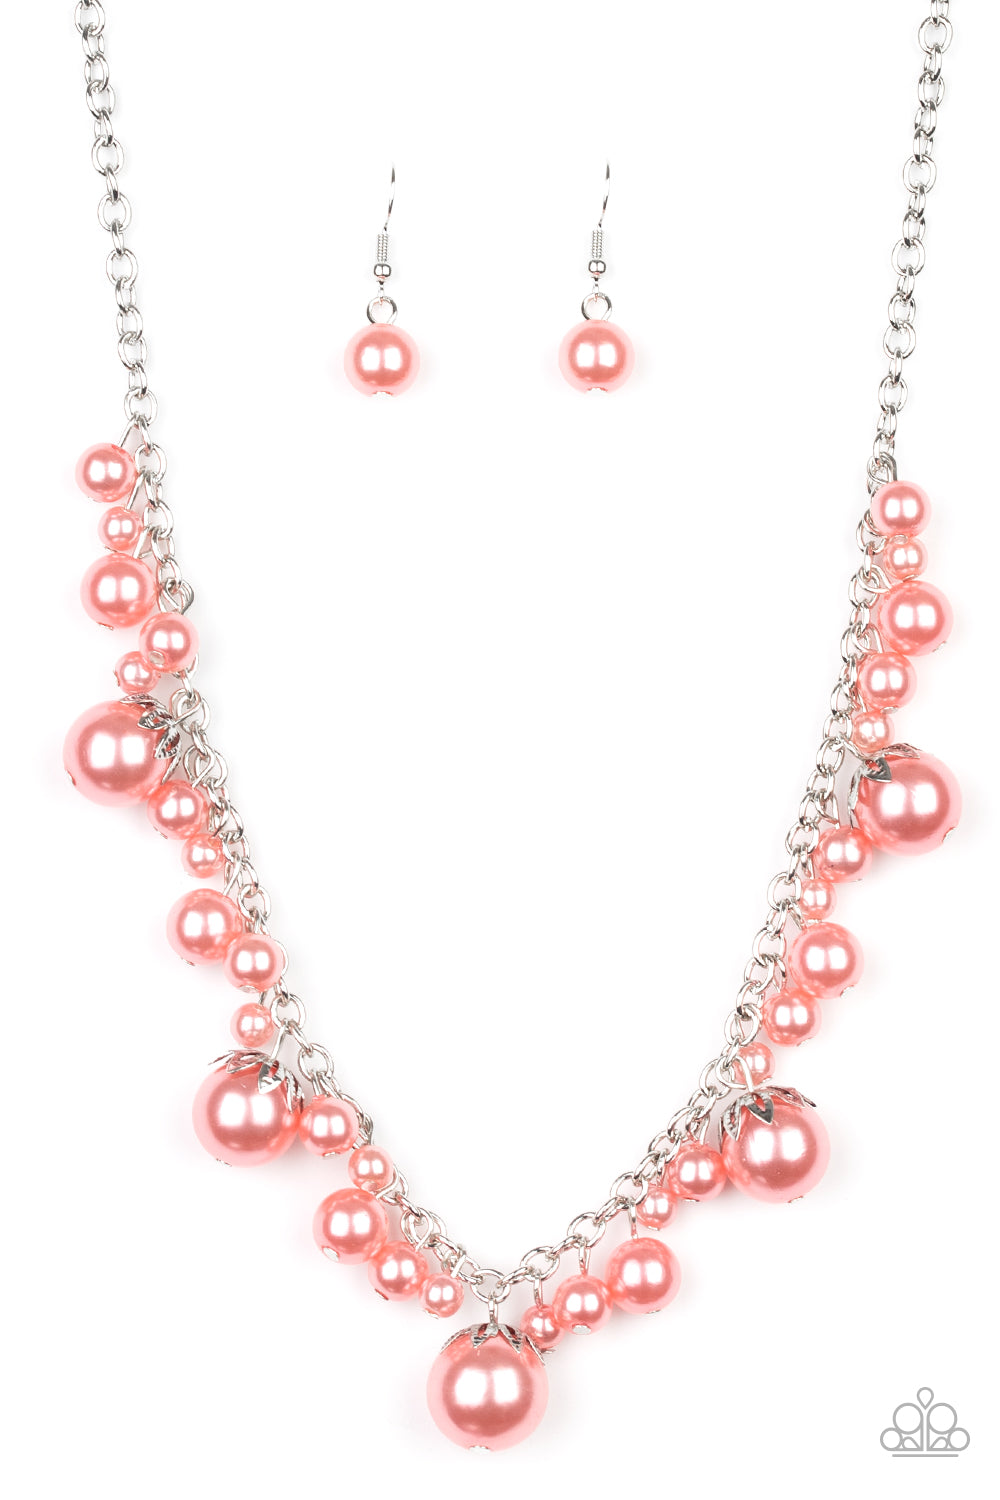 Uptown Pearls - Orange pearl necklace